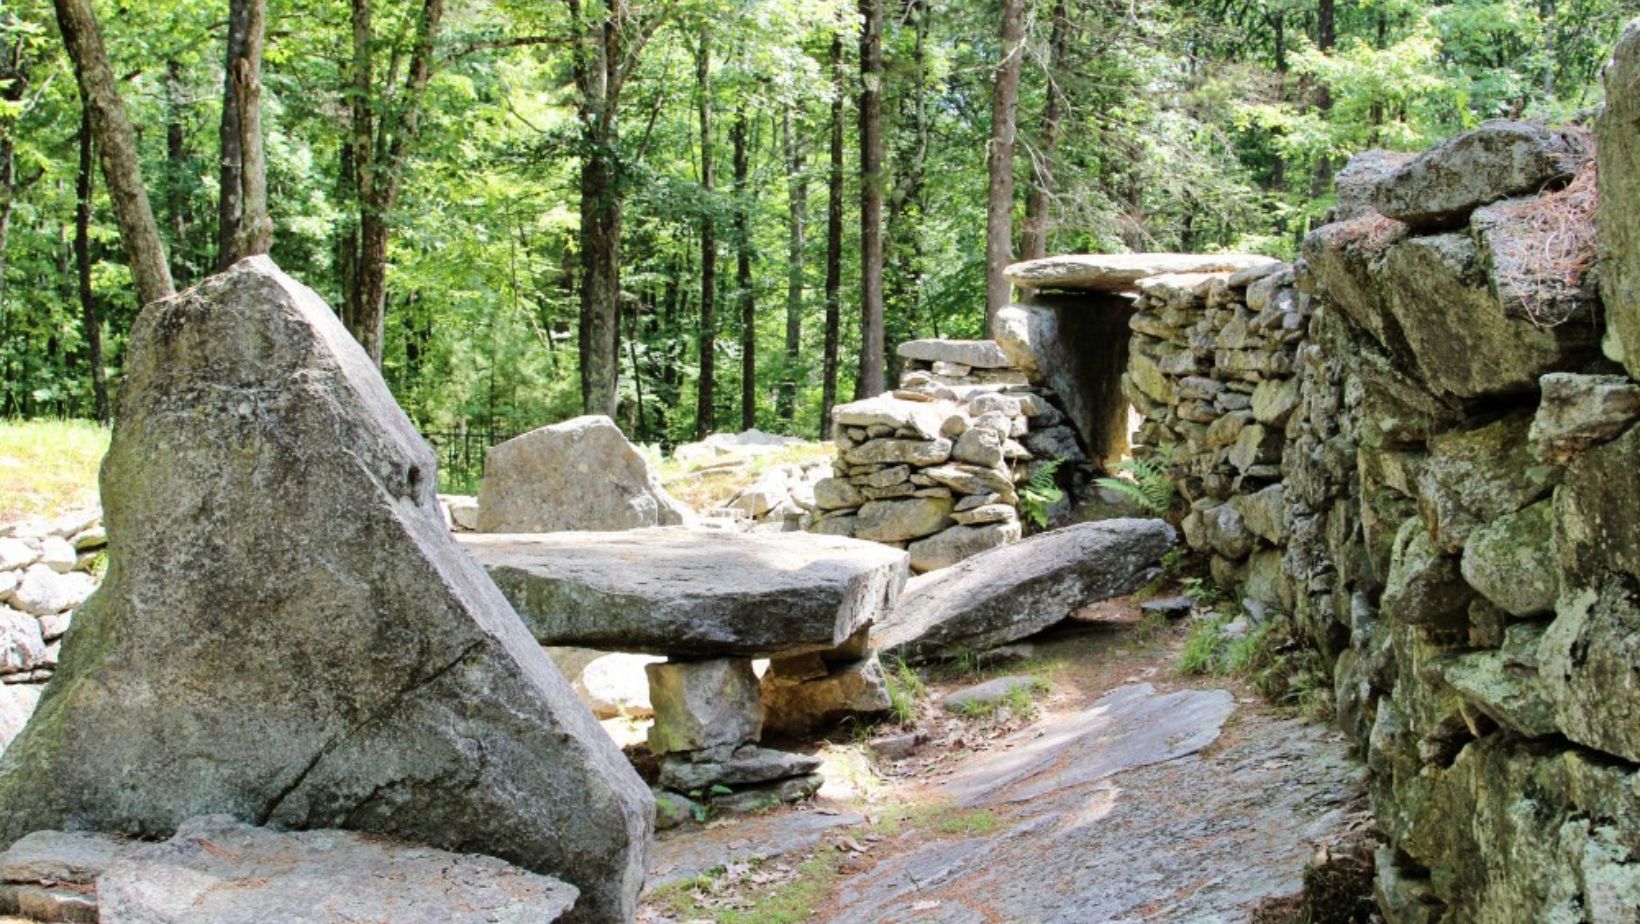 Mystery Hill America's Stonehenge